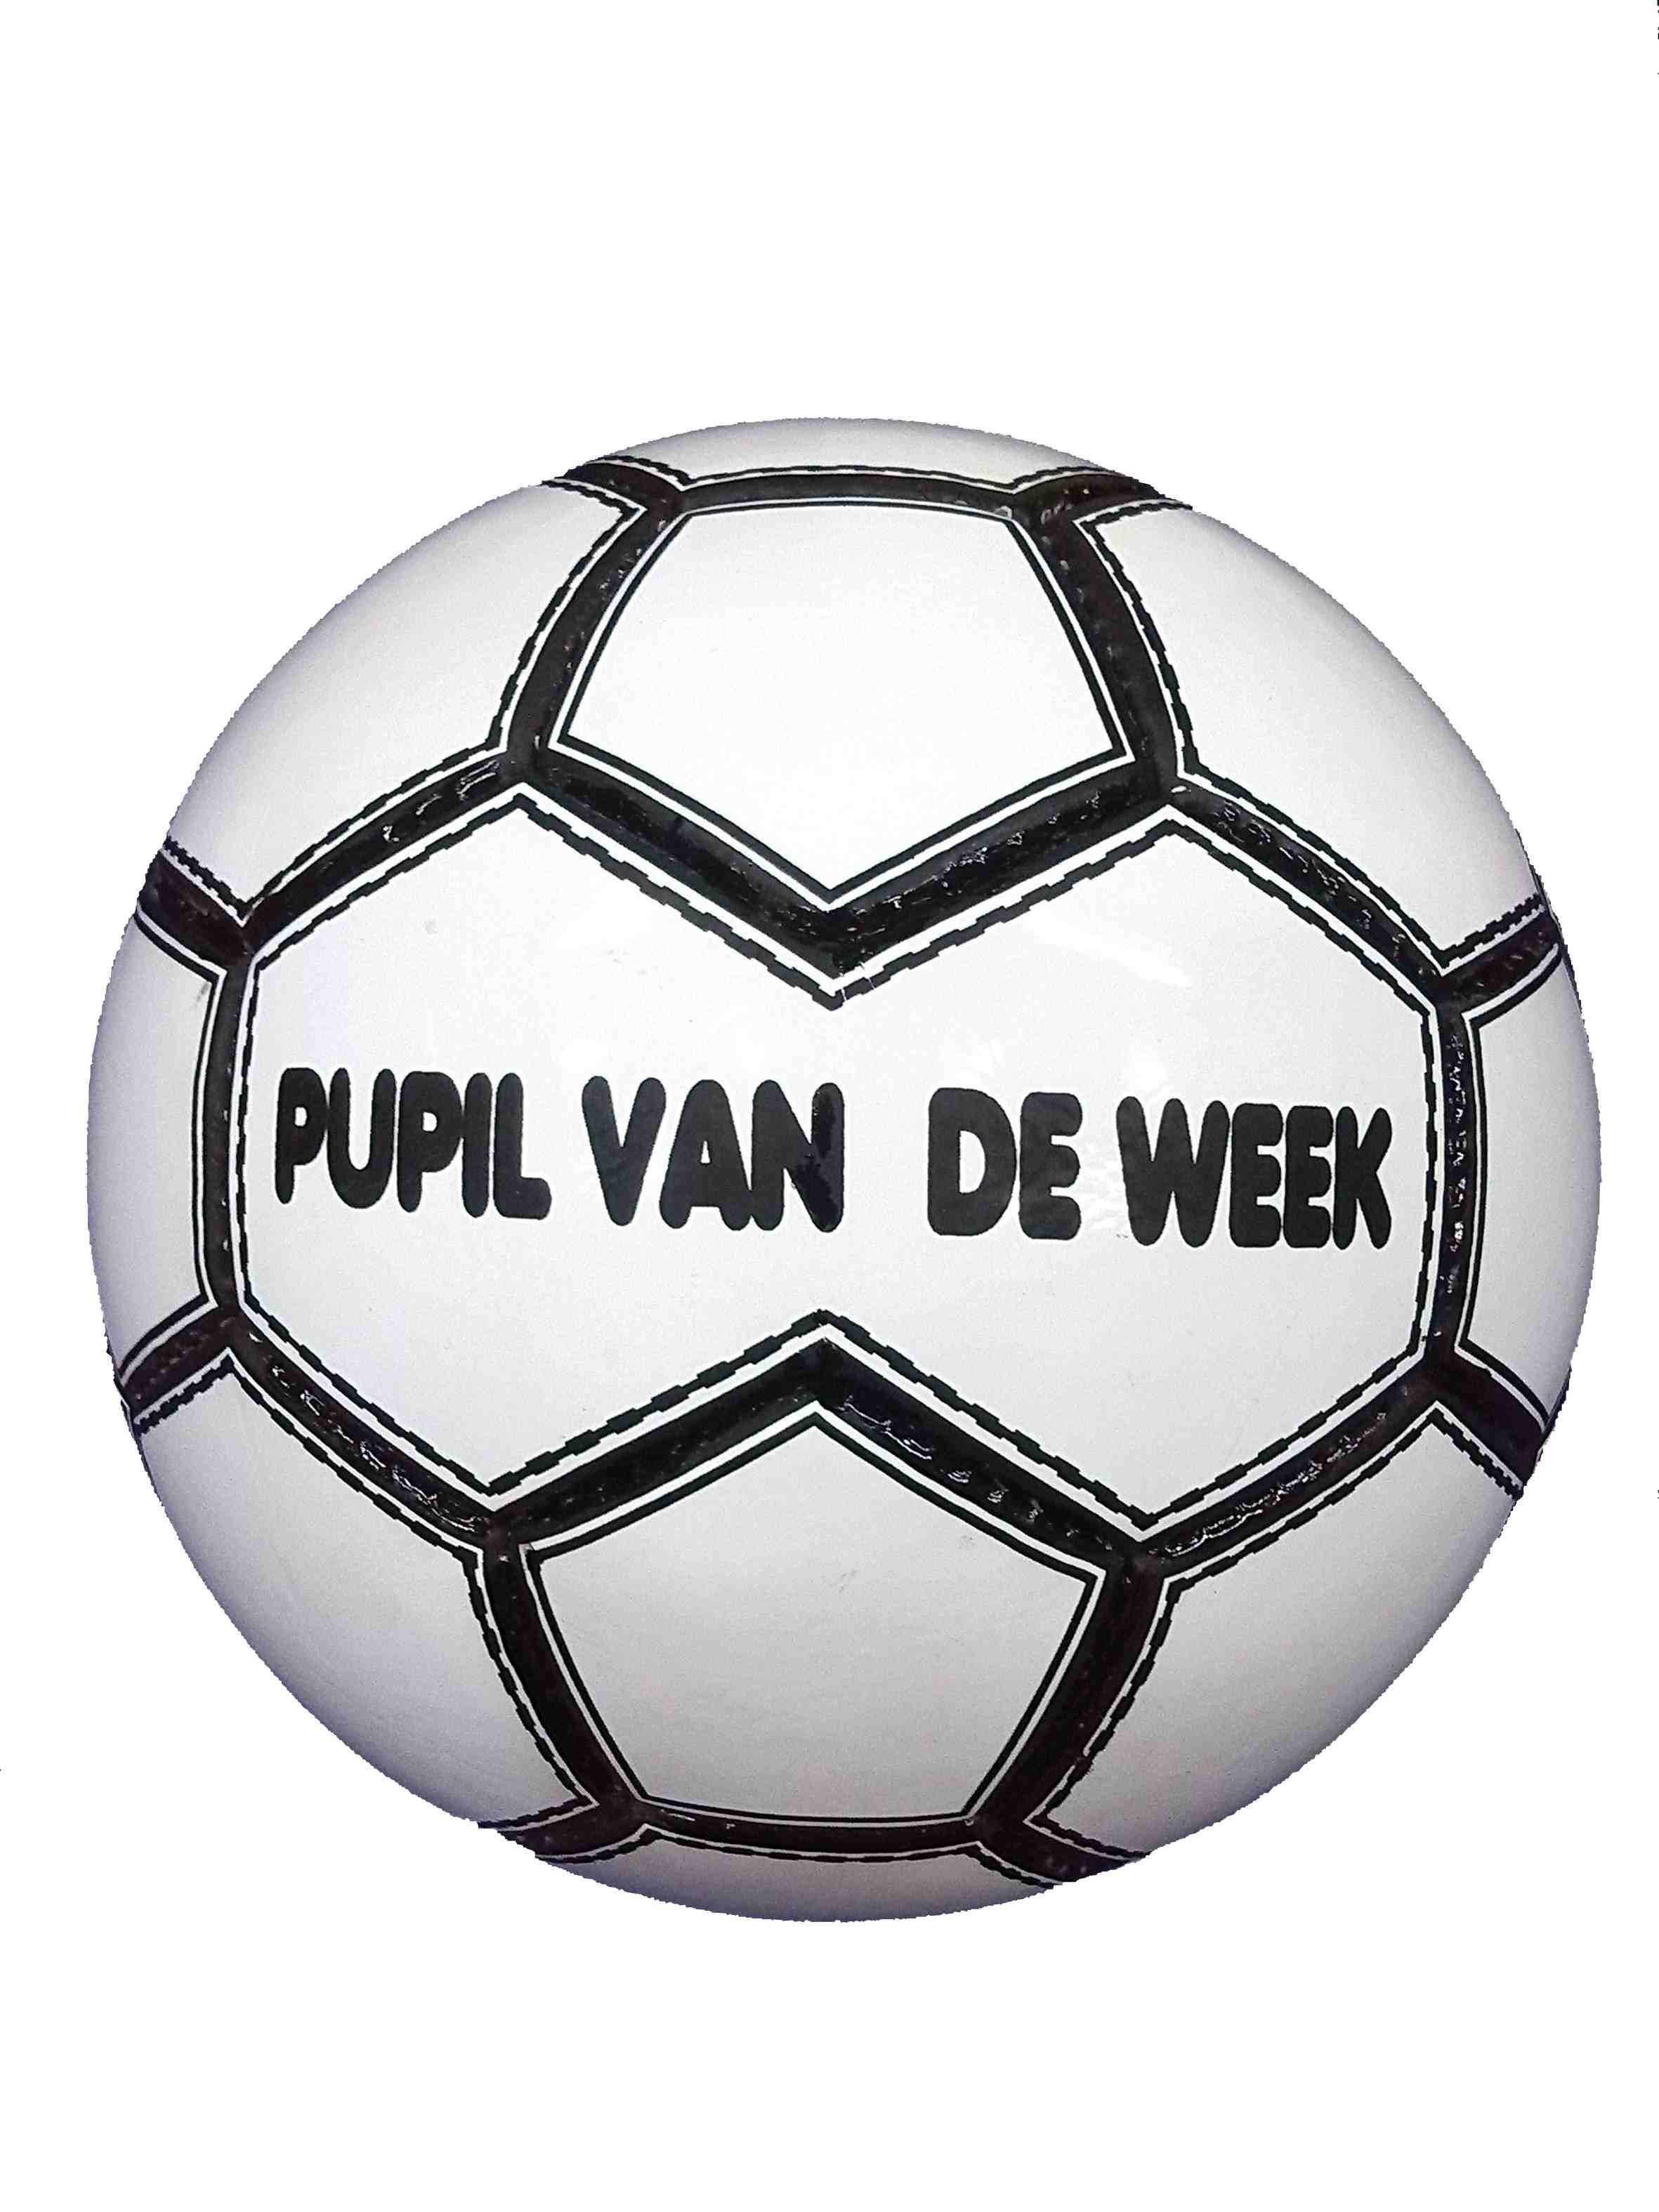 https://www.kwd.nl/media/catalog/product/p/u/pupil_van_de_week_zwart.jpg